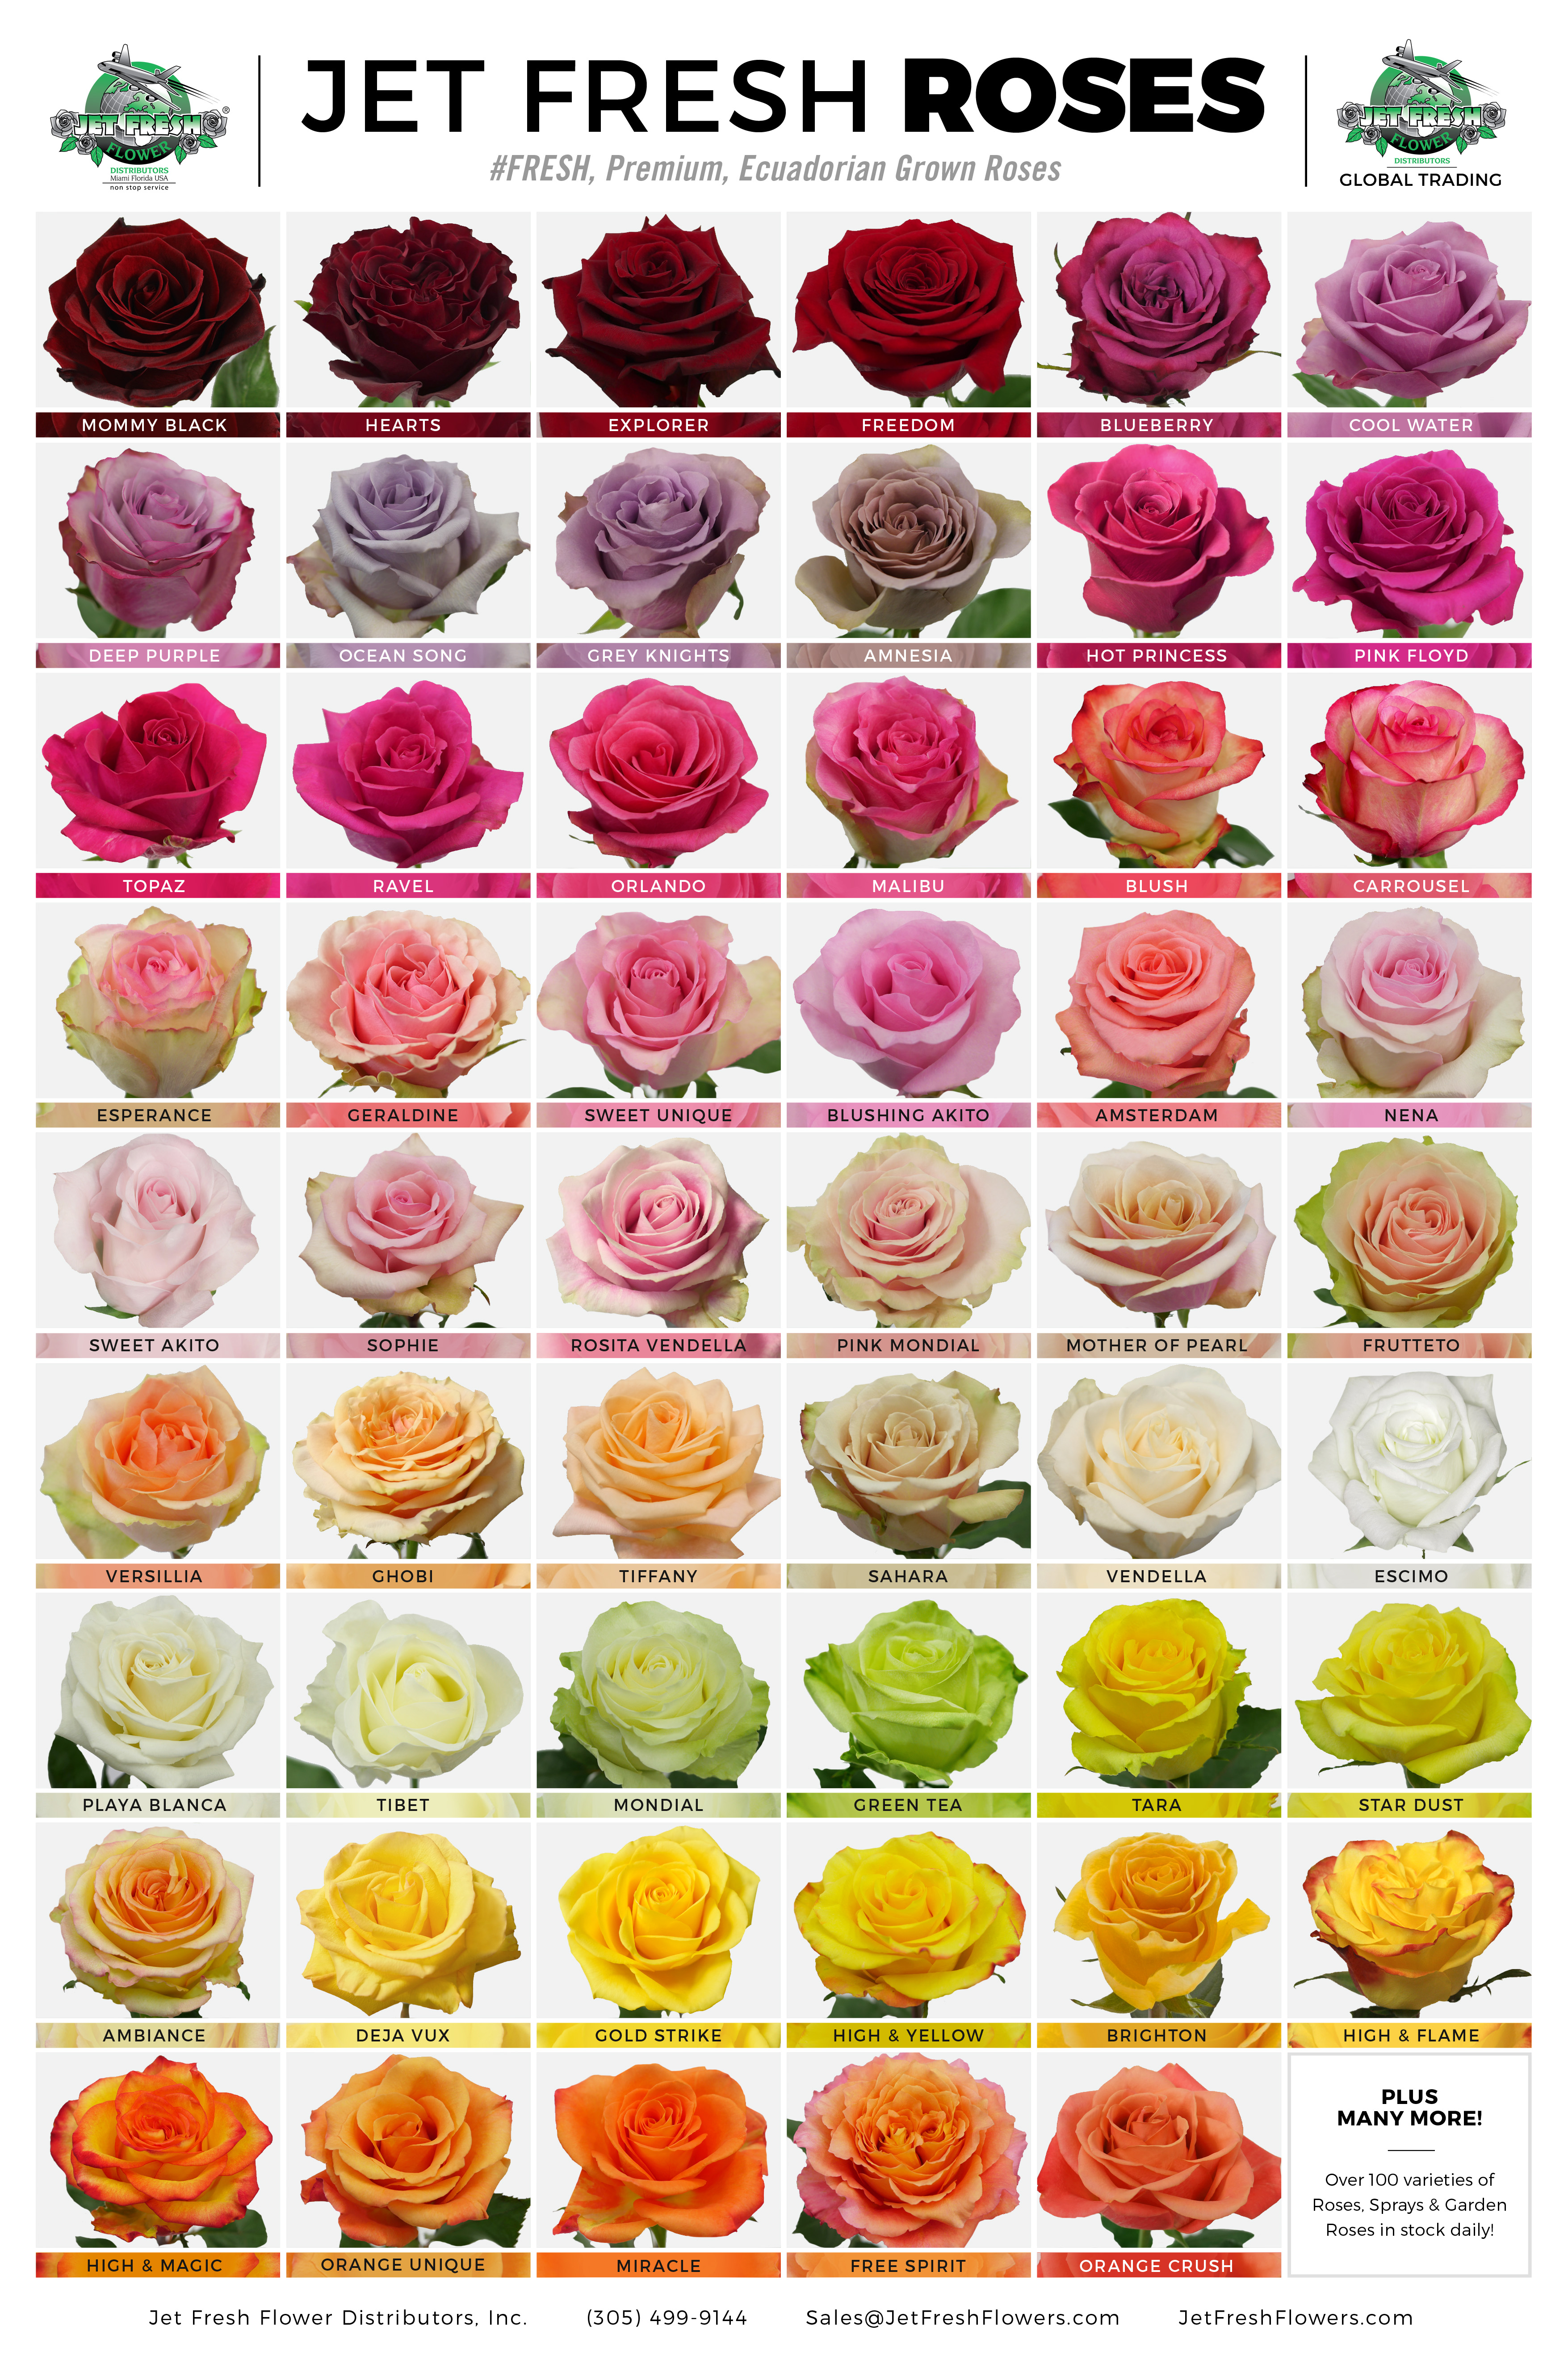 Ecuadorian Grown Roses - Jet Fresh Flower Distributors